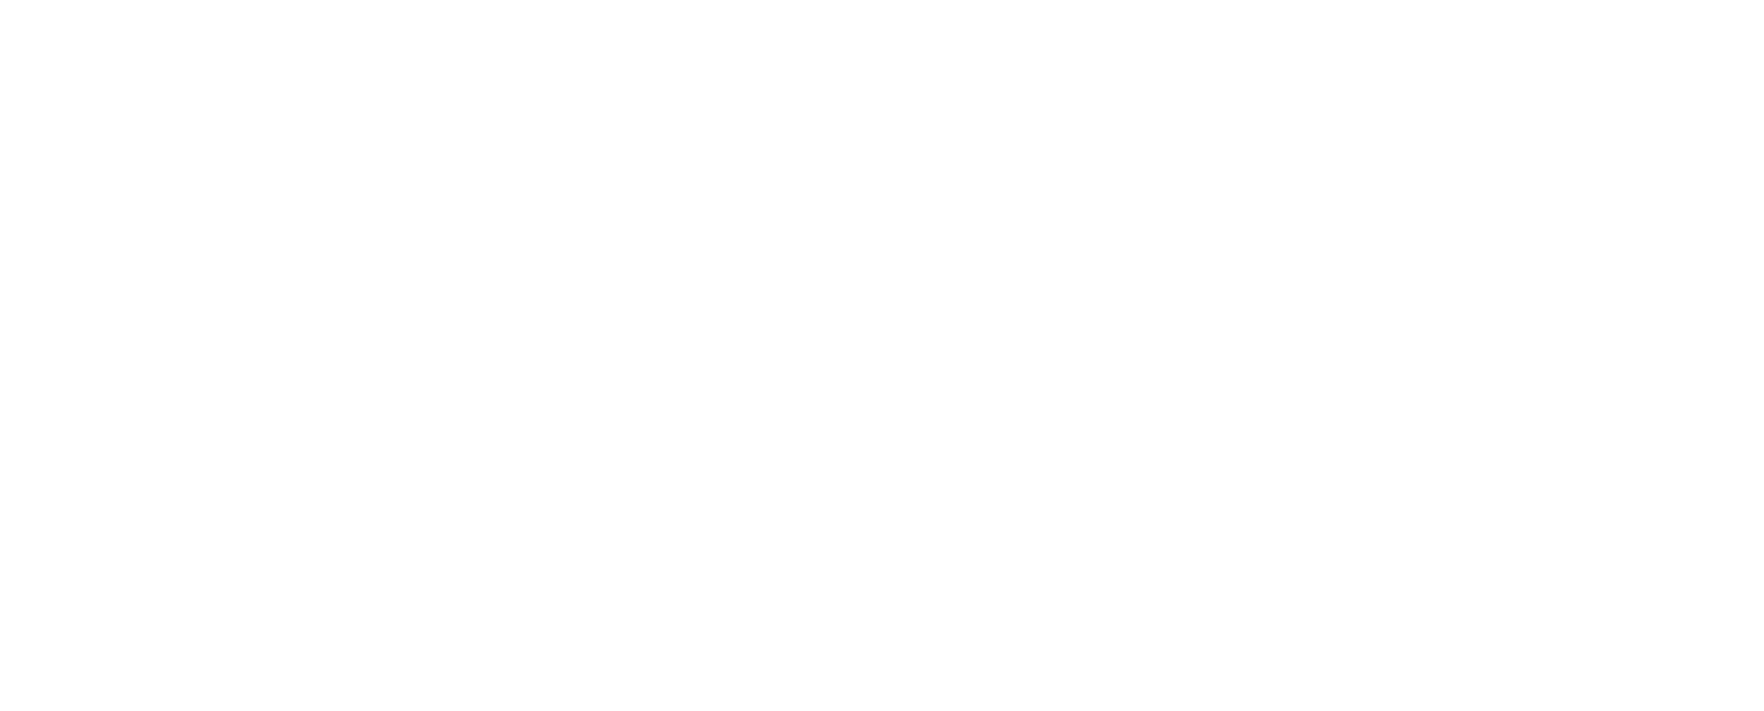 Estudio: Estudio Doctorado Social Sc na Universidad di Utrecht Academico titulo: Drs den Antropologia Cultural (UU) T   